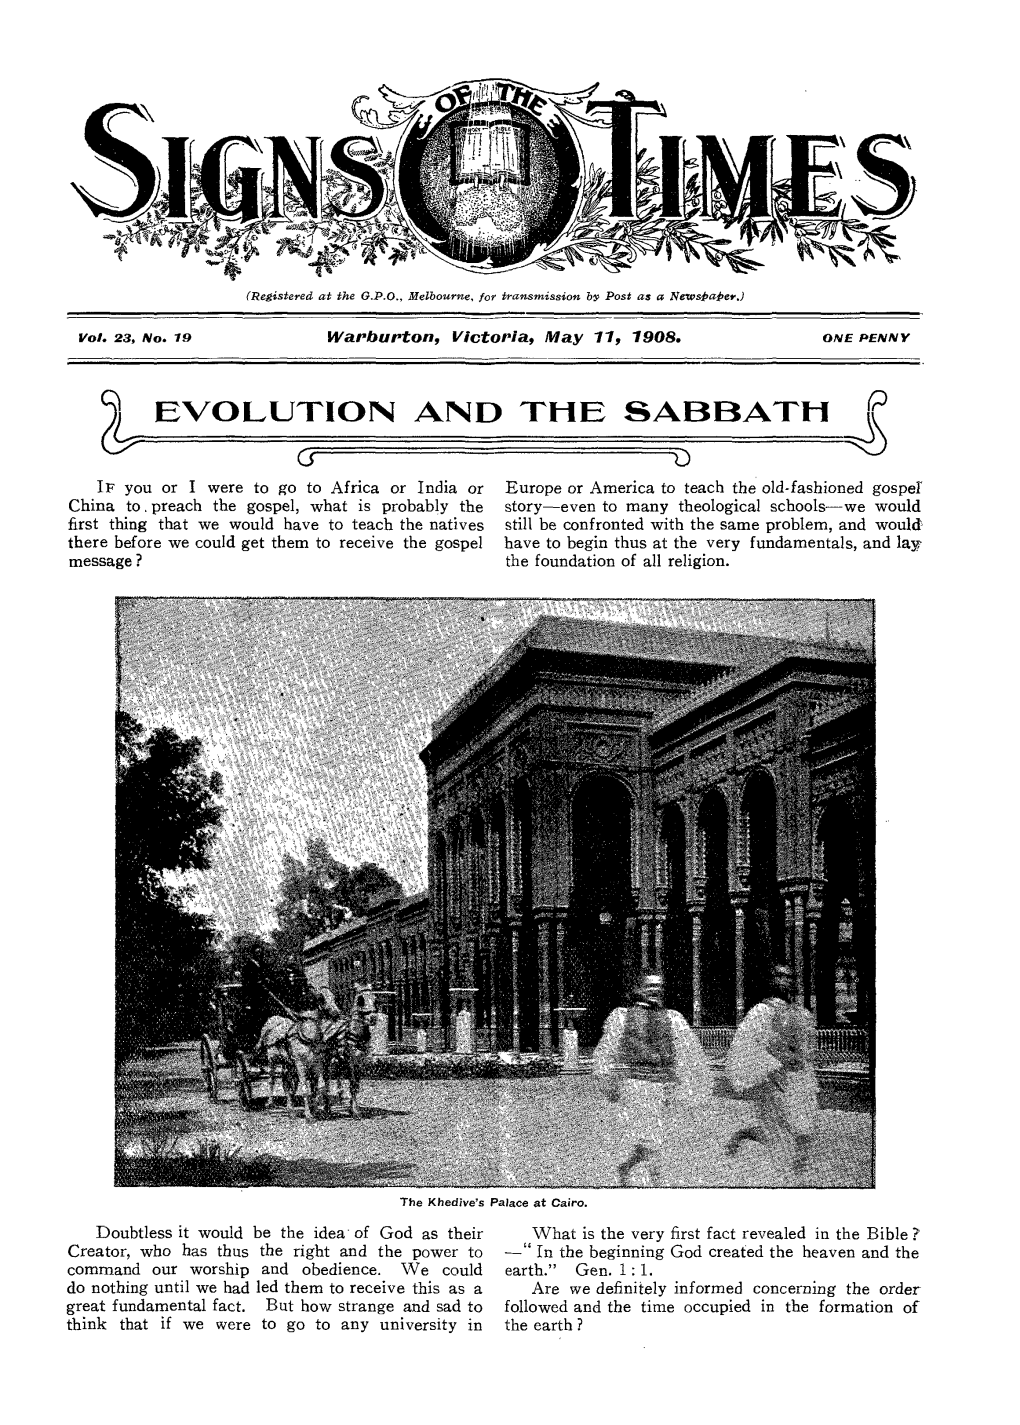 Evolution and the Sabbath